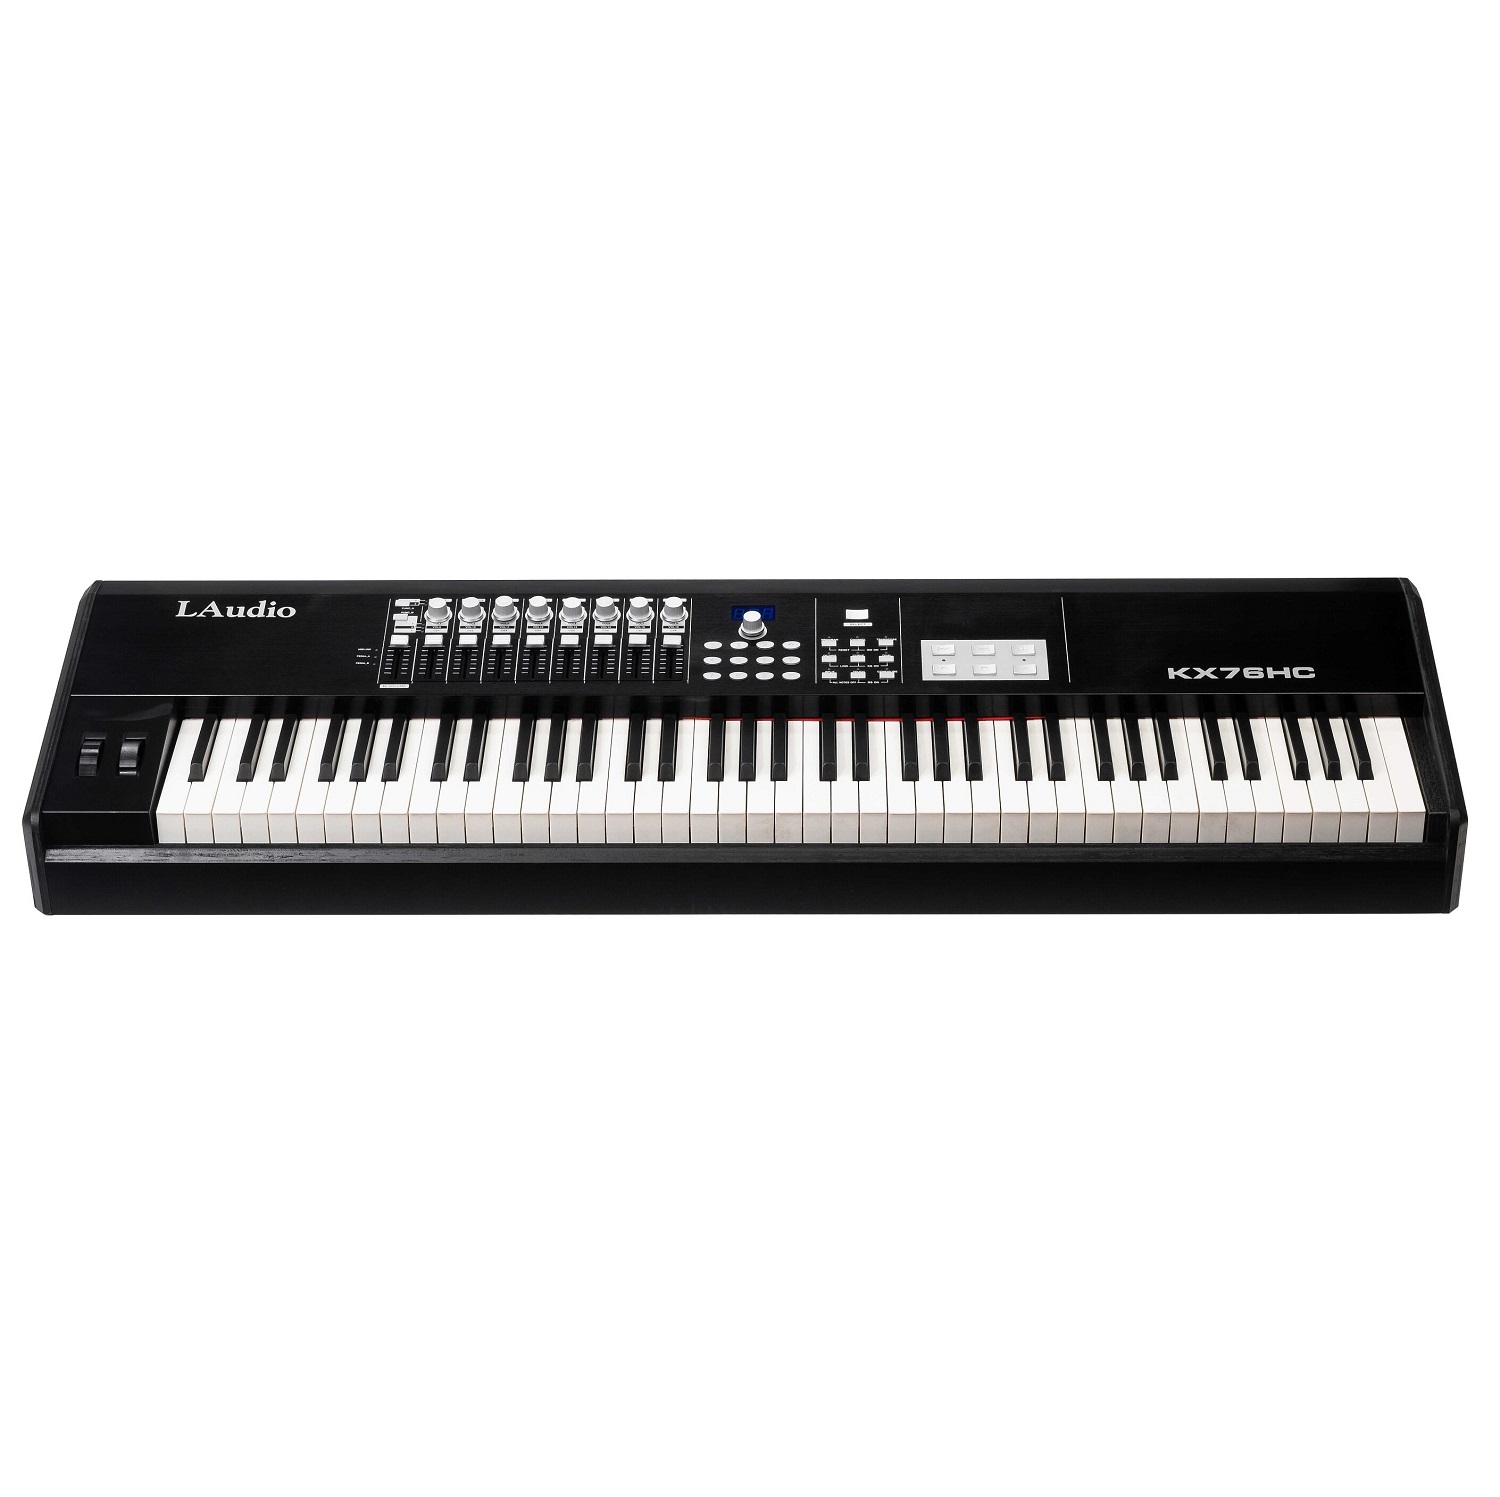 MIDI клавиатуры L Audio KX76HC midi клавиатуры m audio oxygen 49 mkv